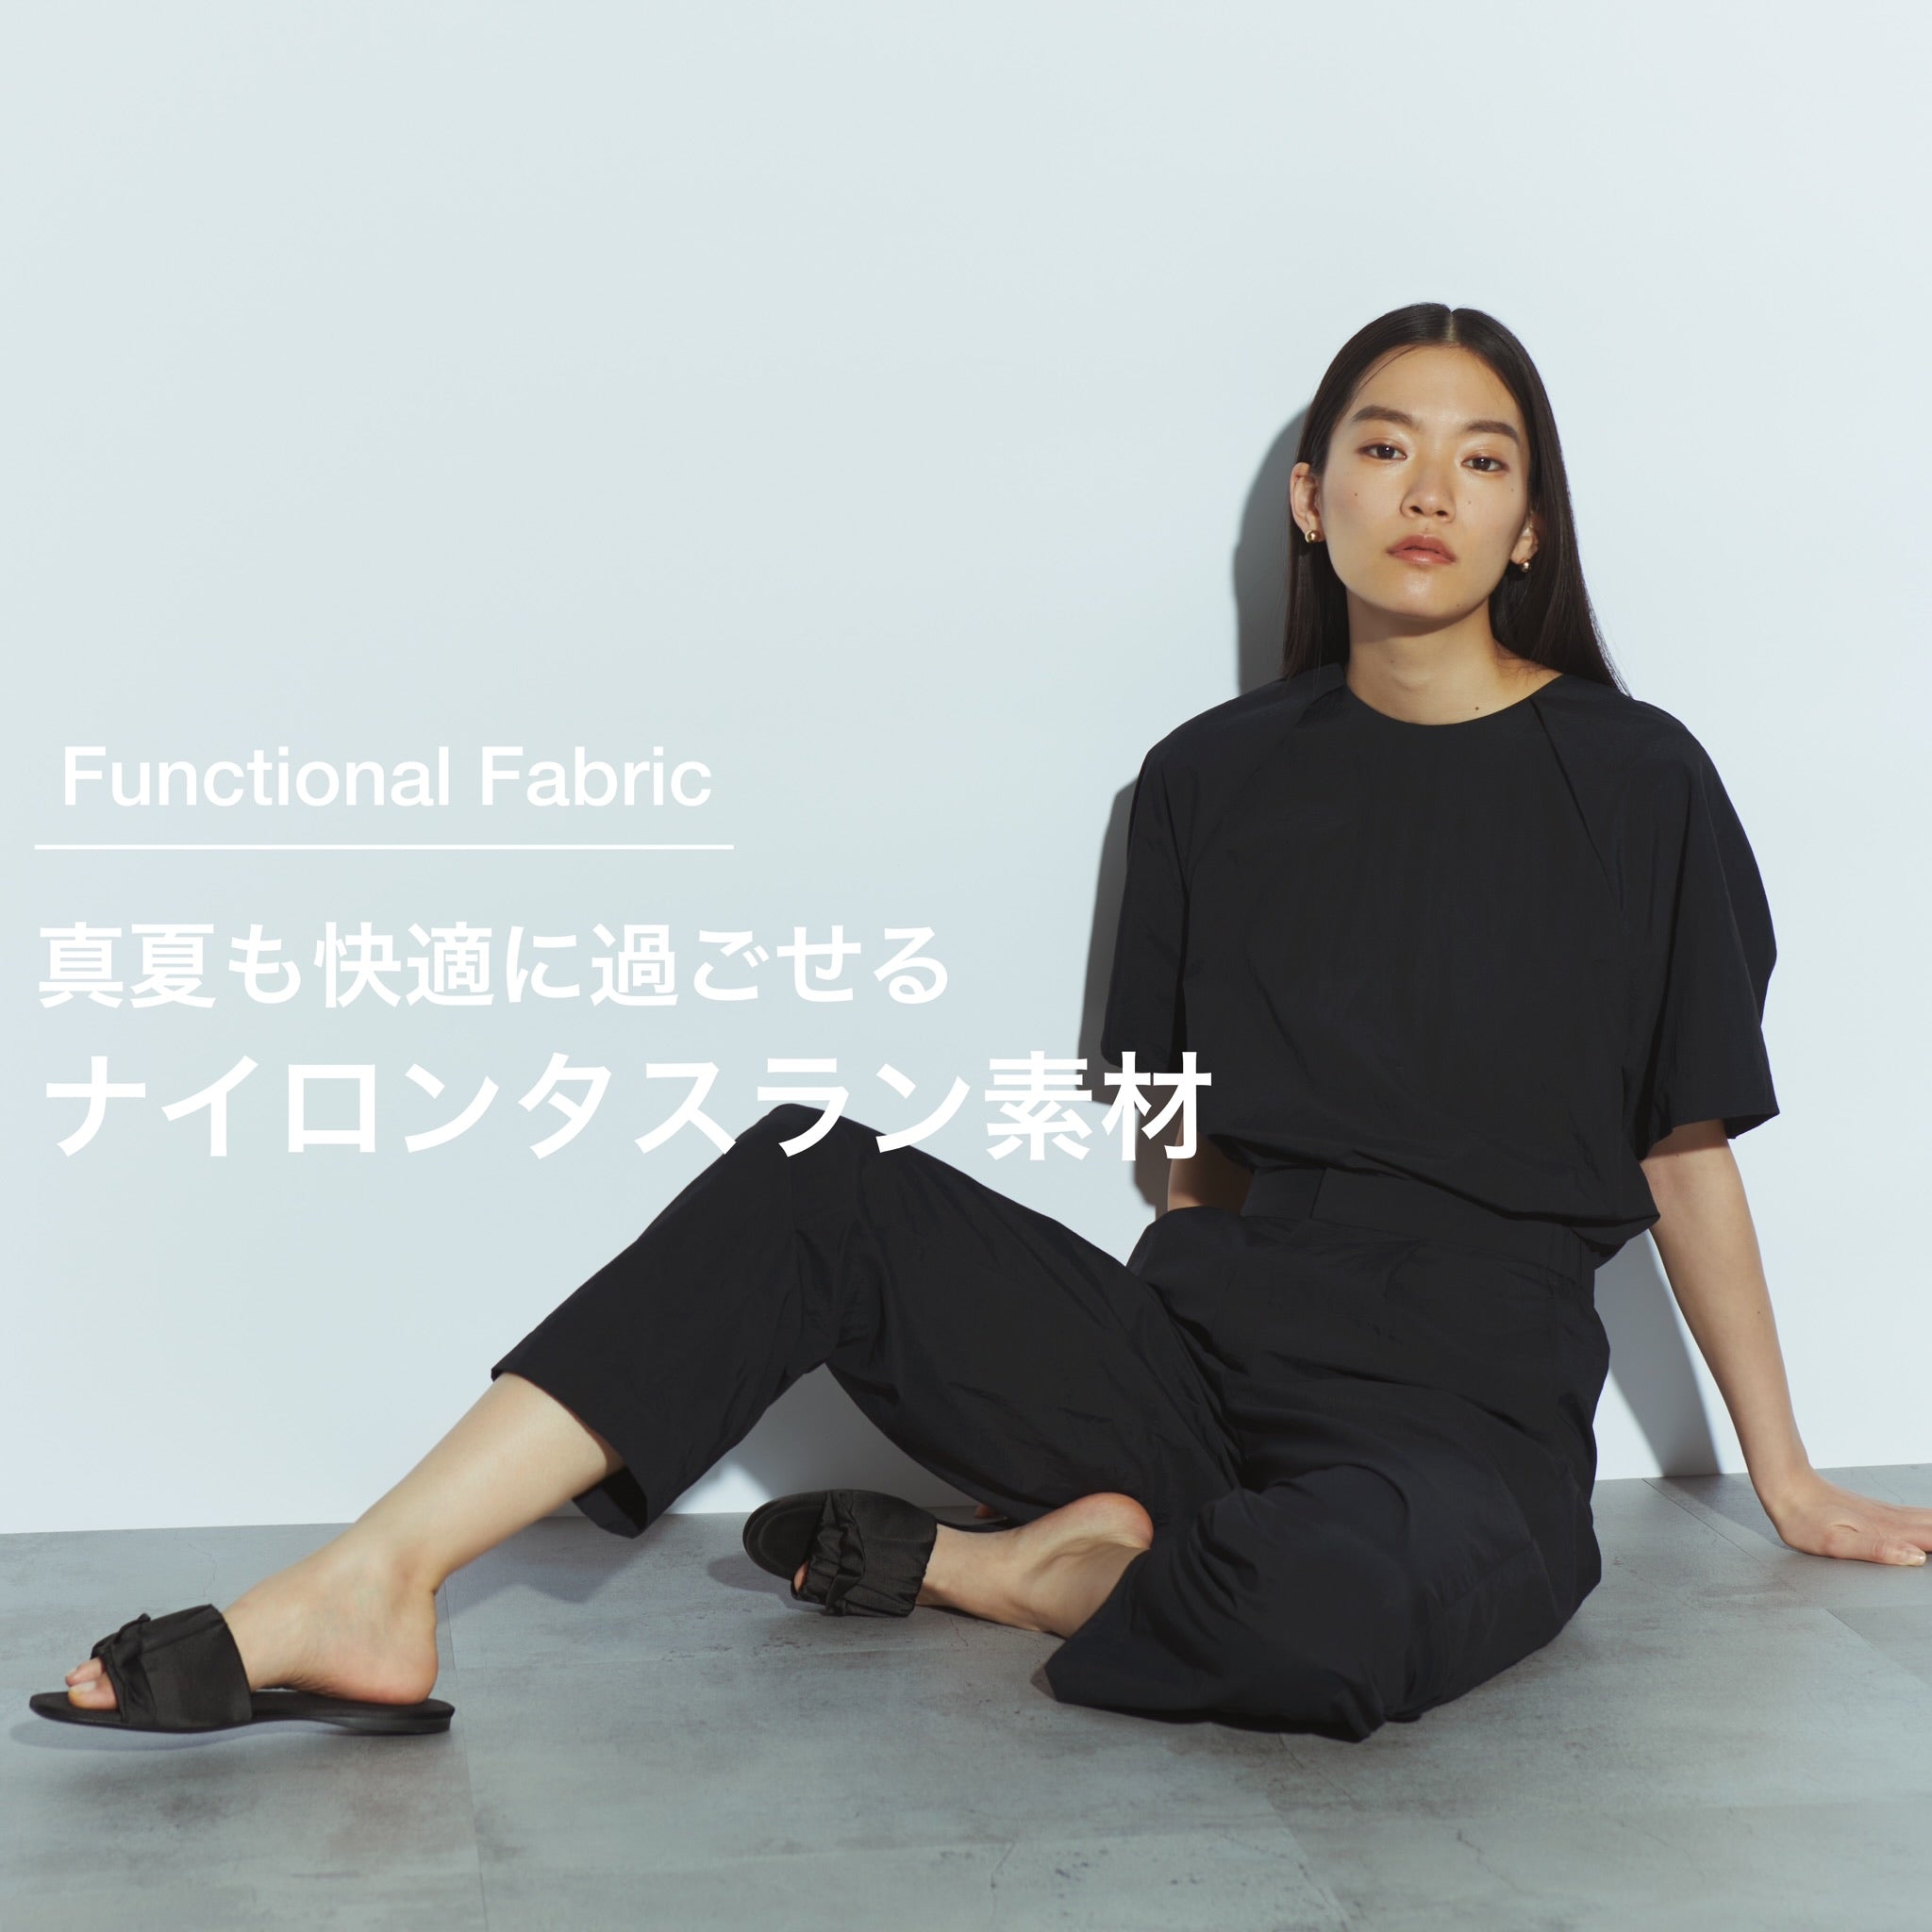 Functional Fabric真夏も快適に過ごせる ナイロンタスラン素材 – NAVE